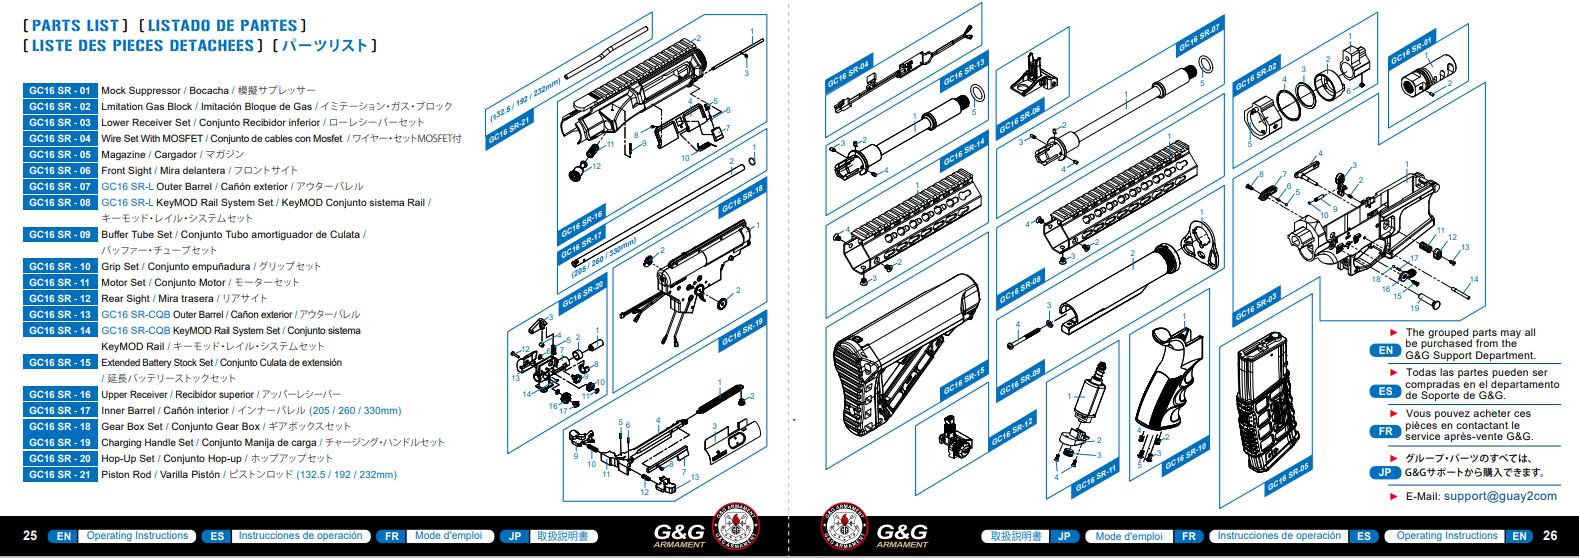 Spare Part GC16 SR-10 #5 (#5 2pcs.) - Pistol Grip srews for GC16 SR Series - G&G